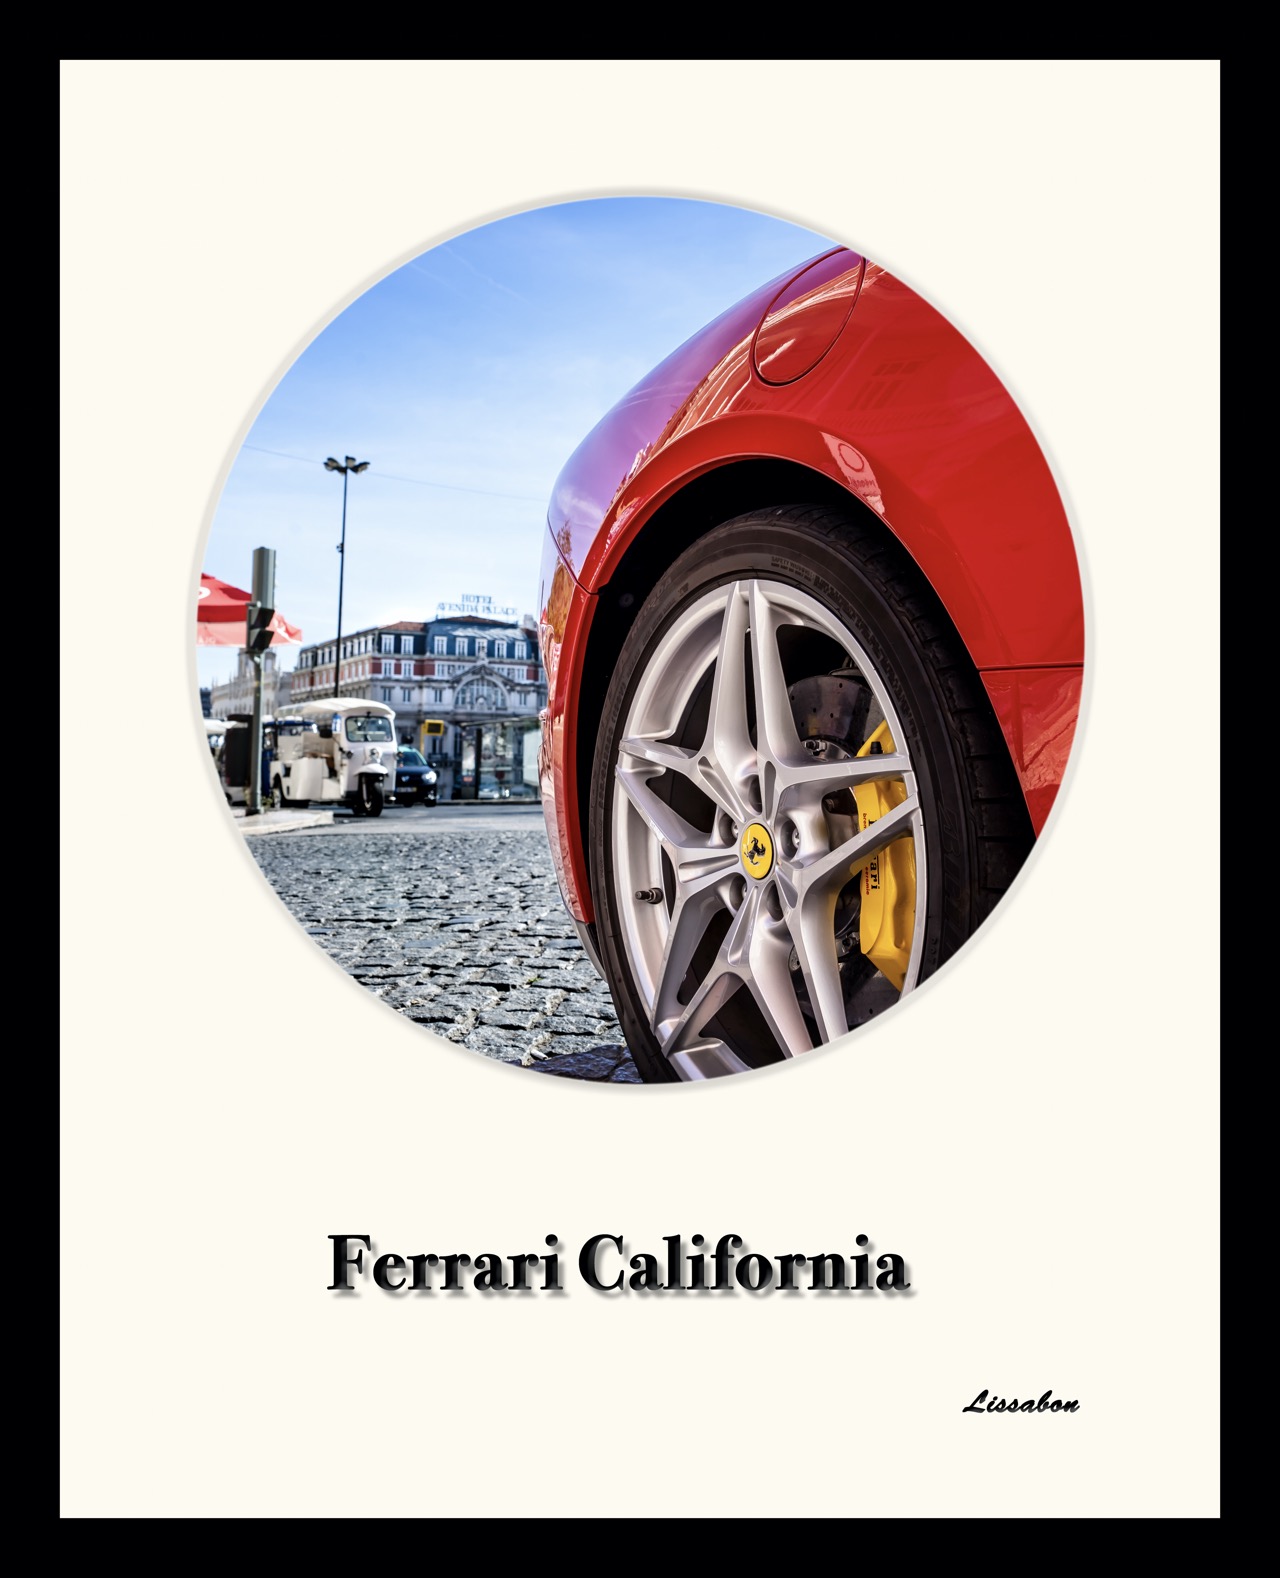 Motiv Ferrari California in Lissabon